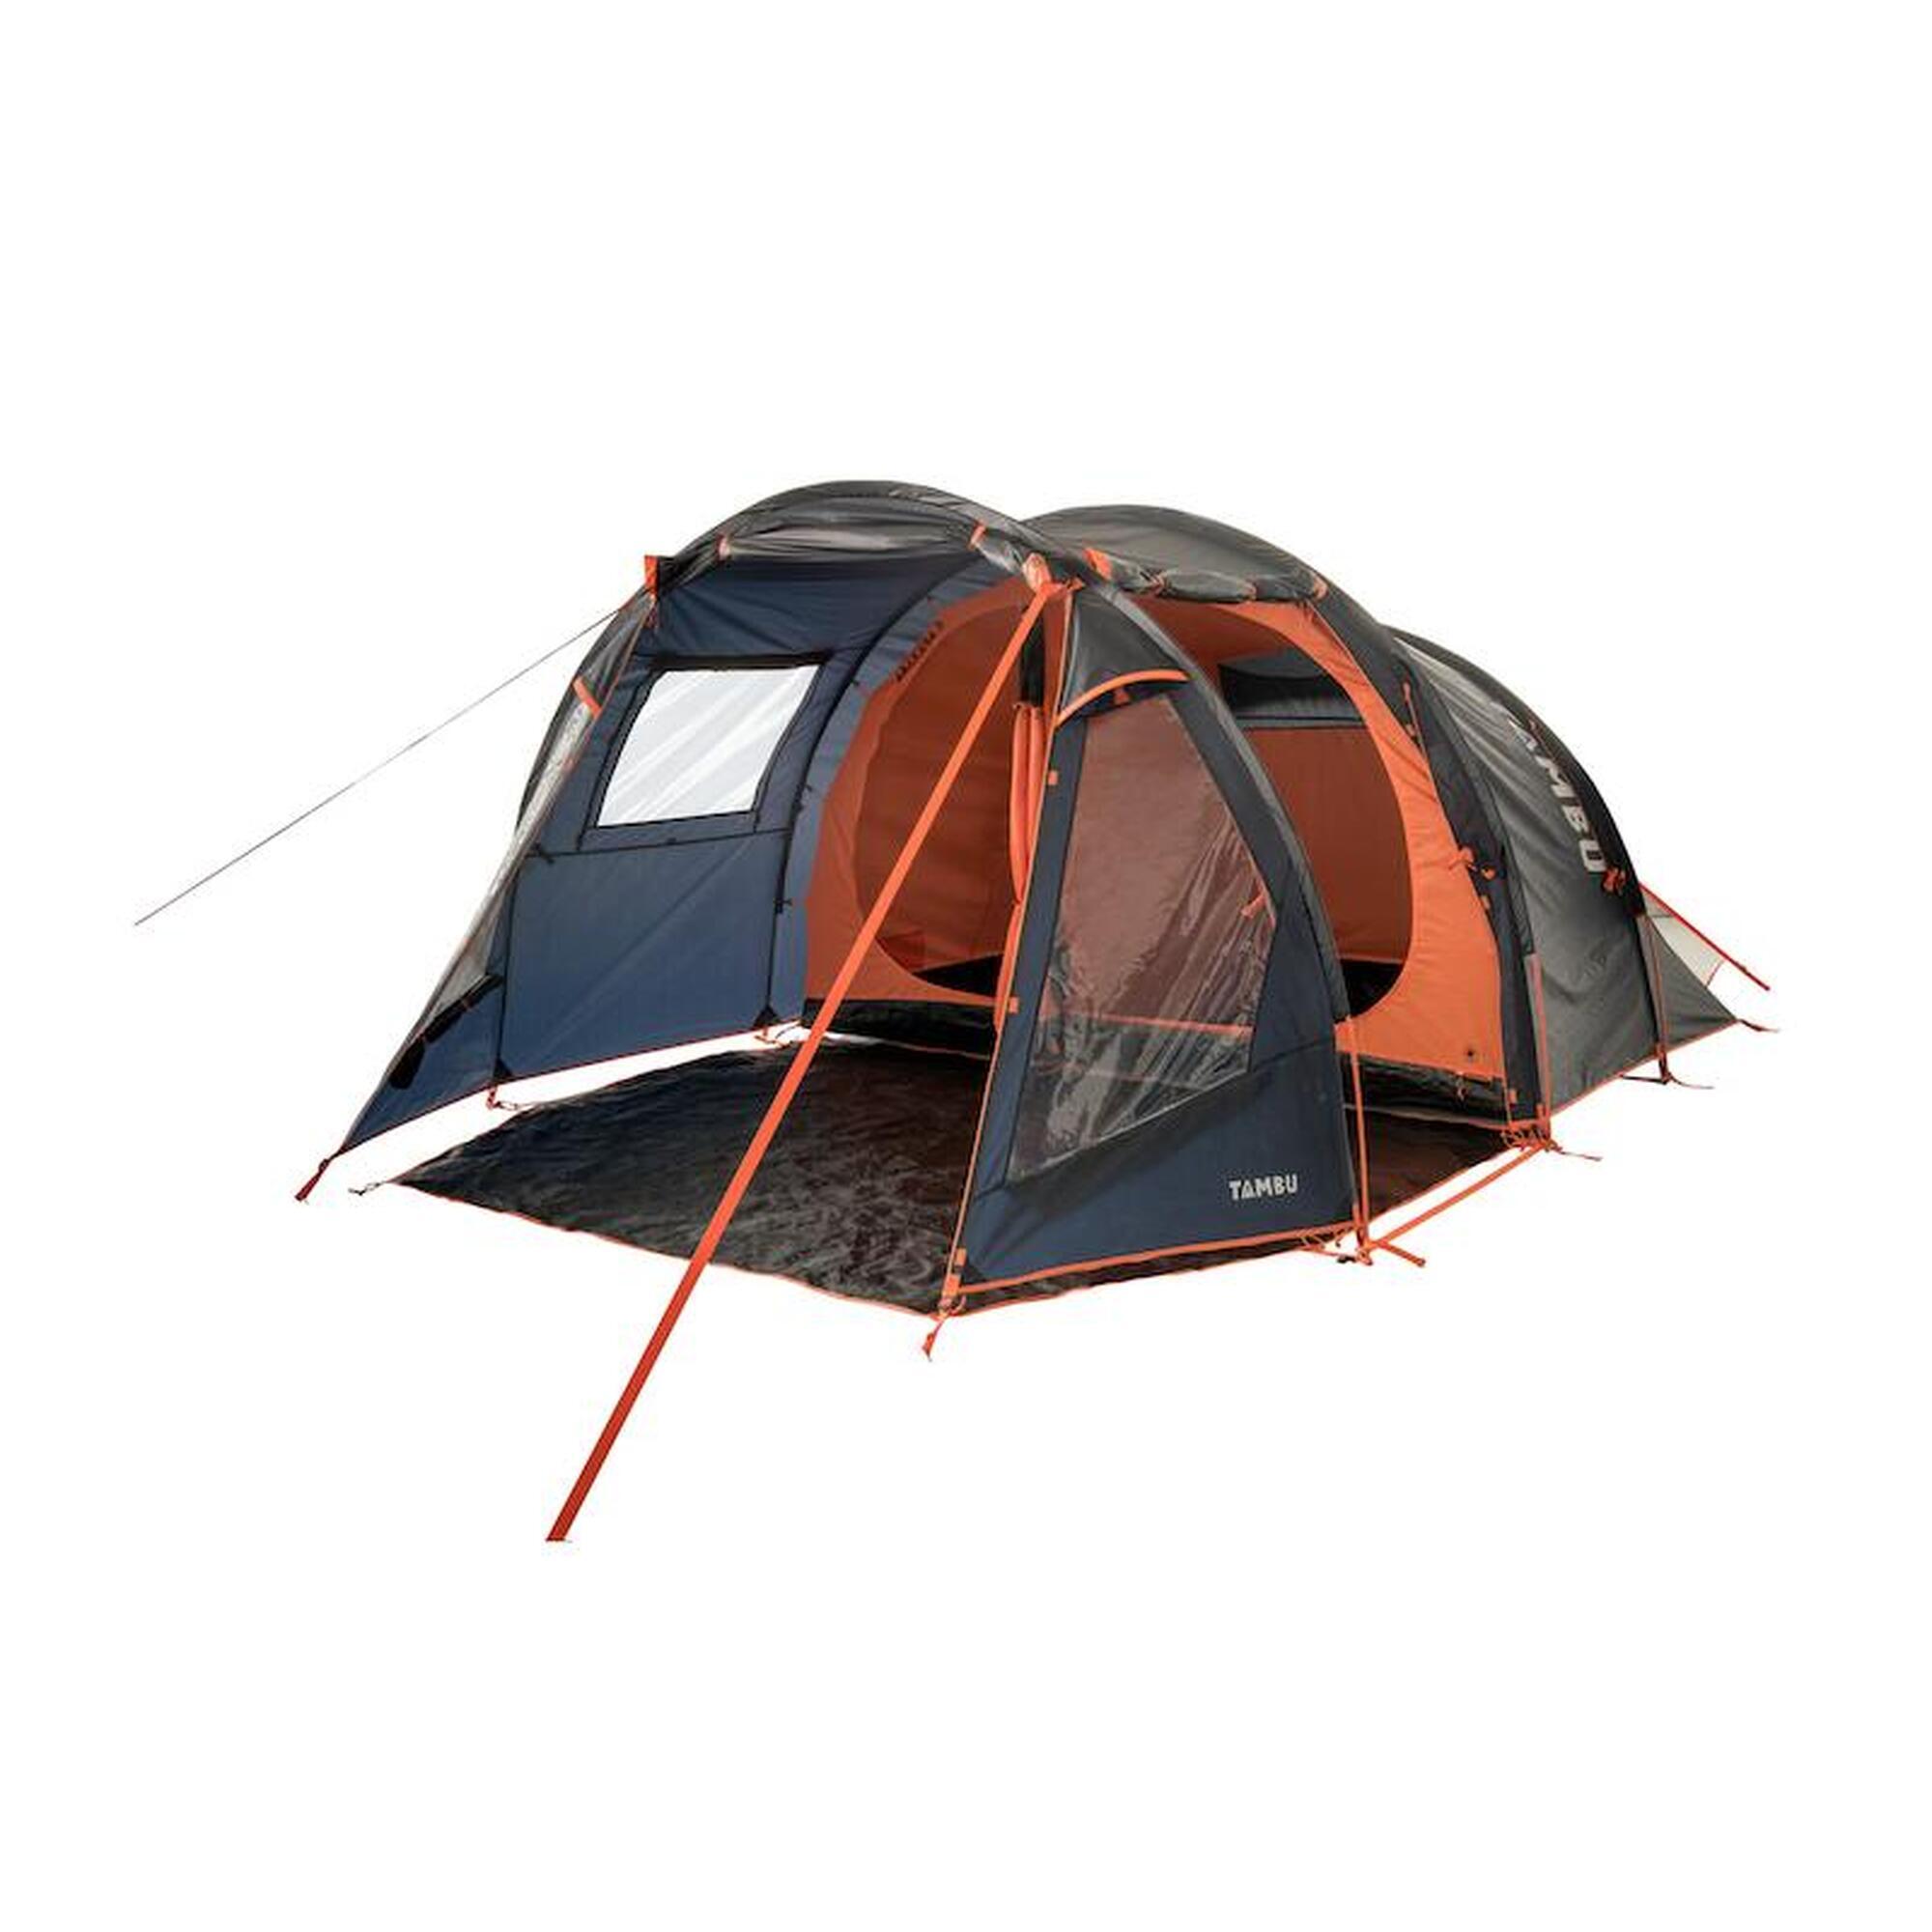 Tunnelzelt TAMBU Abakasa 5 Personen Camping Zelt in Stehhöhe mit Vorbau  TAMBU - DECATHLON | Zelte